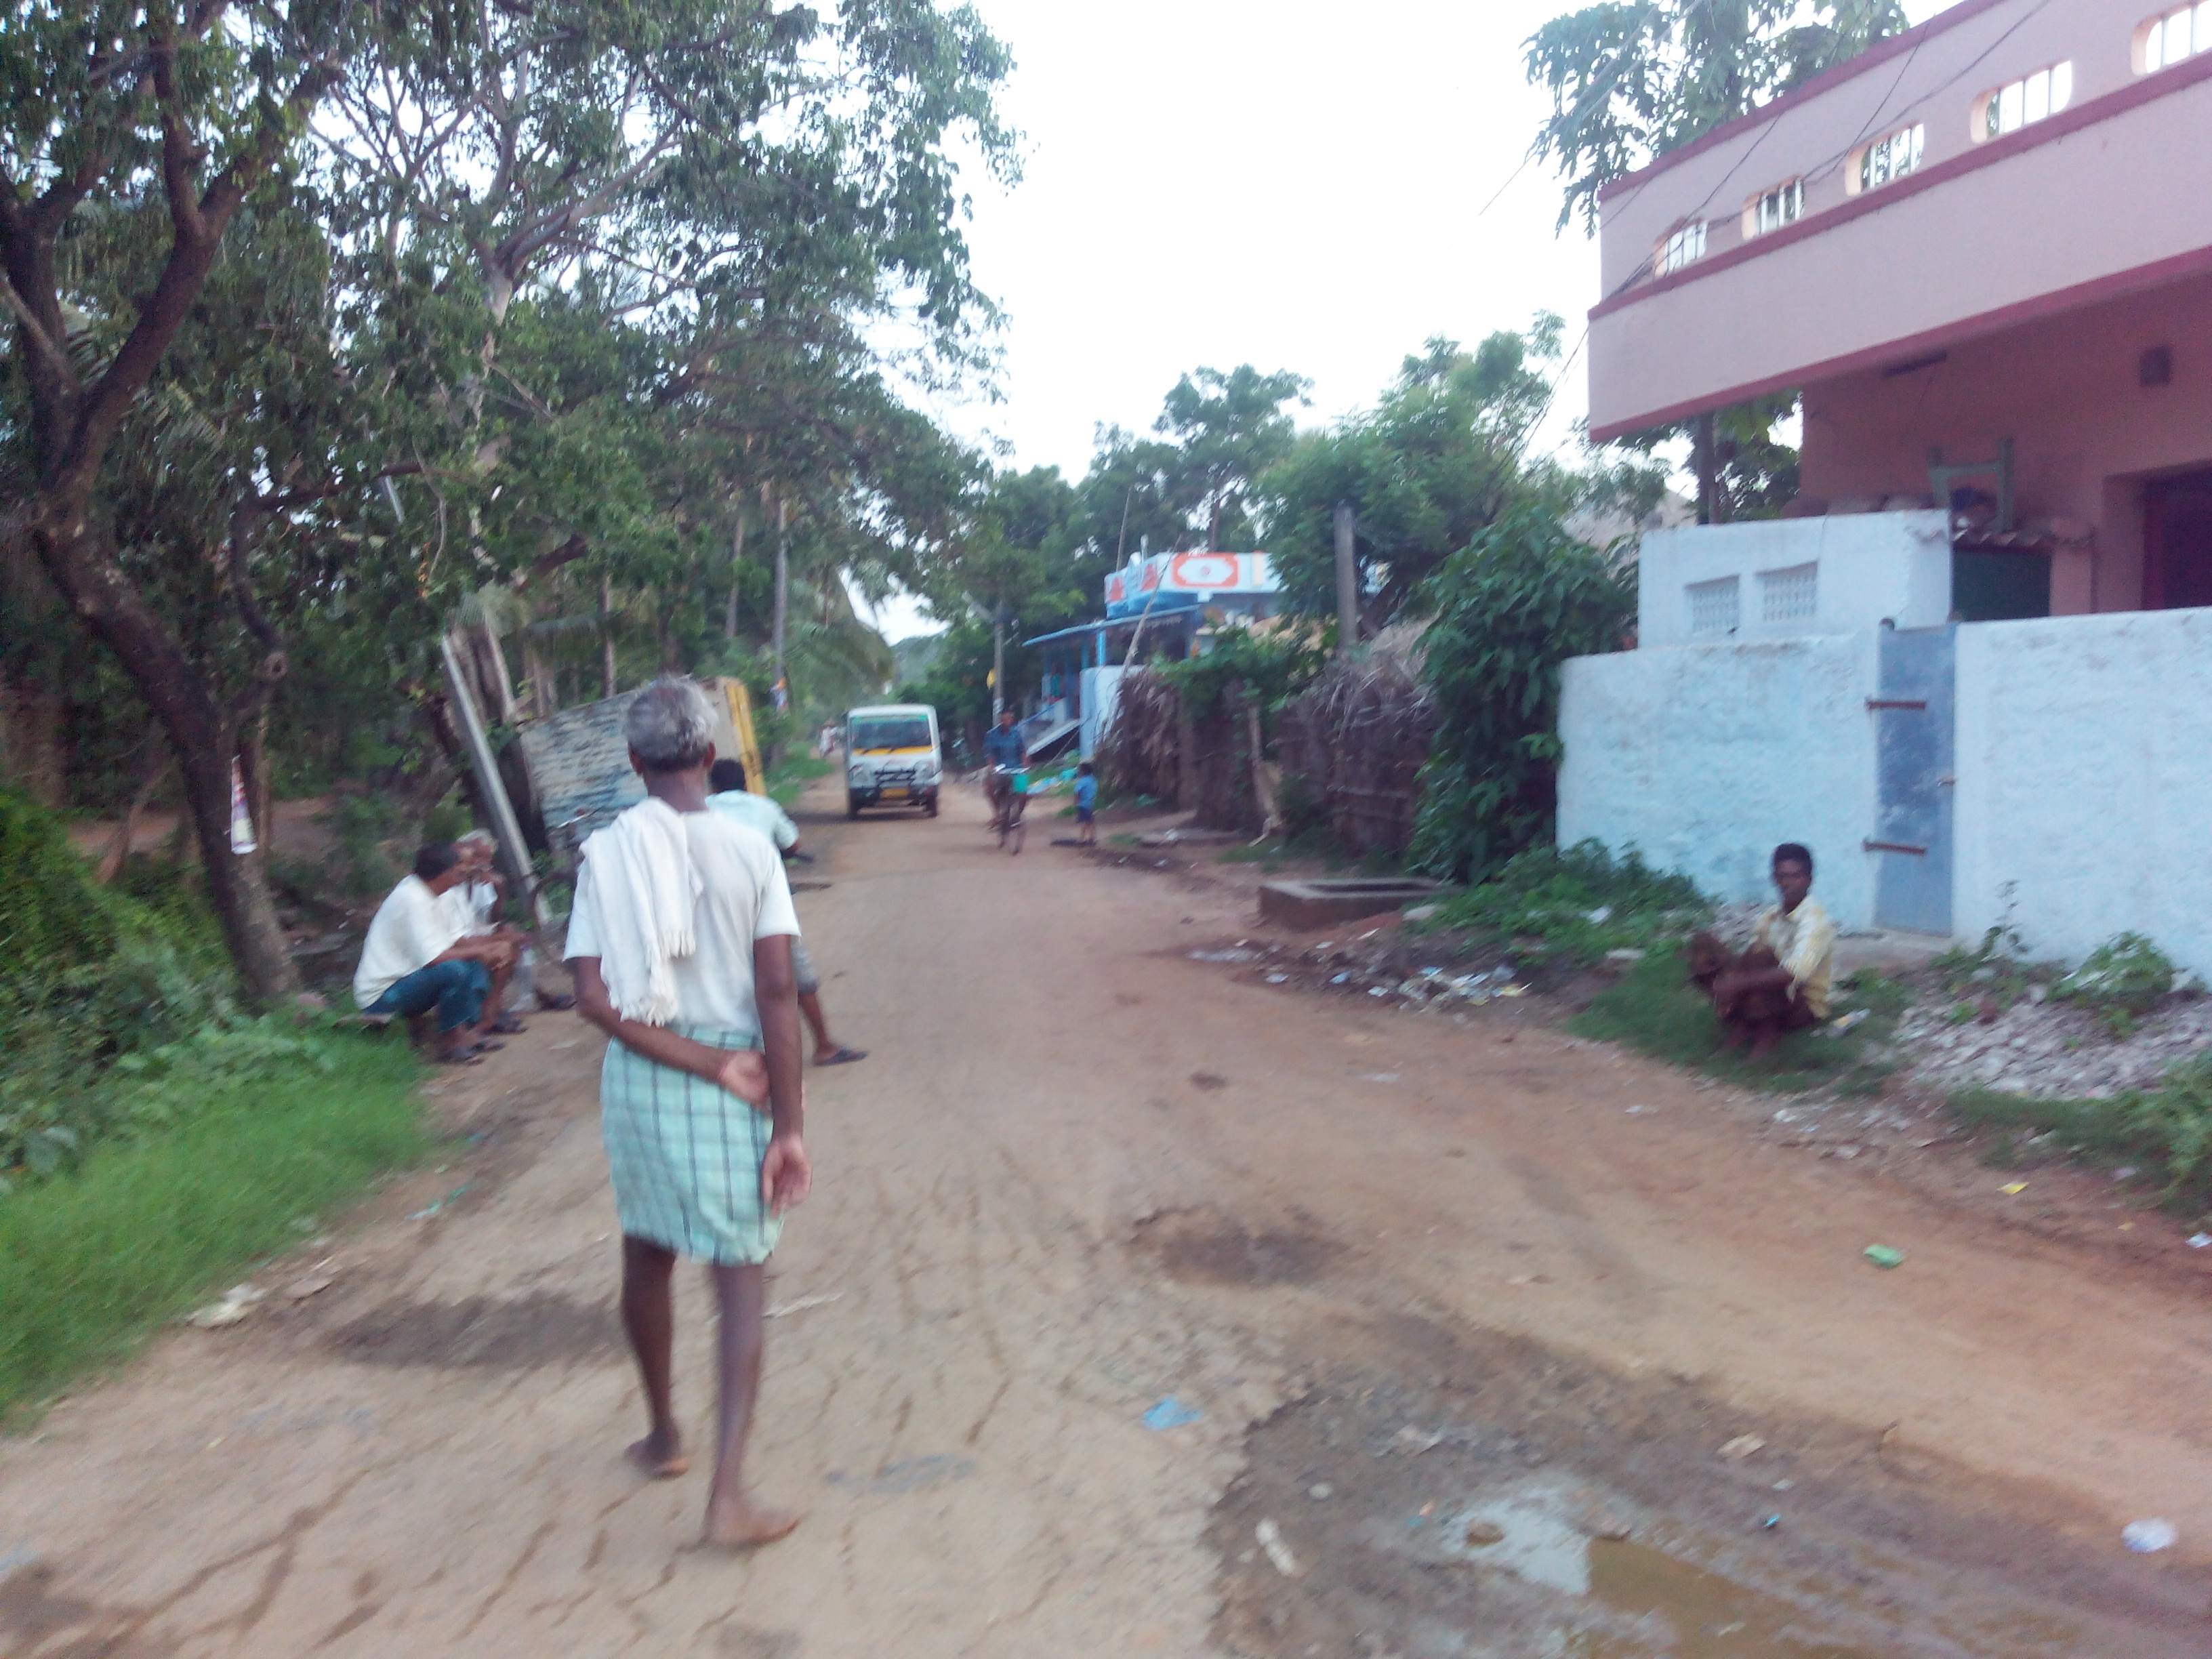 Putlacheruvu Main Raod Center towards South End, Raagi Chettu Center